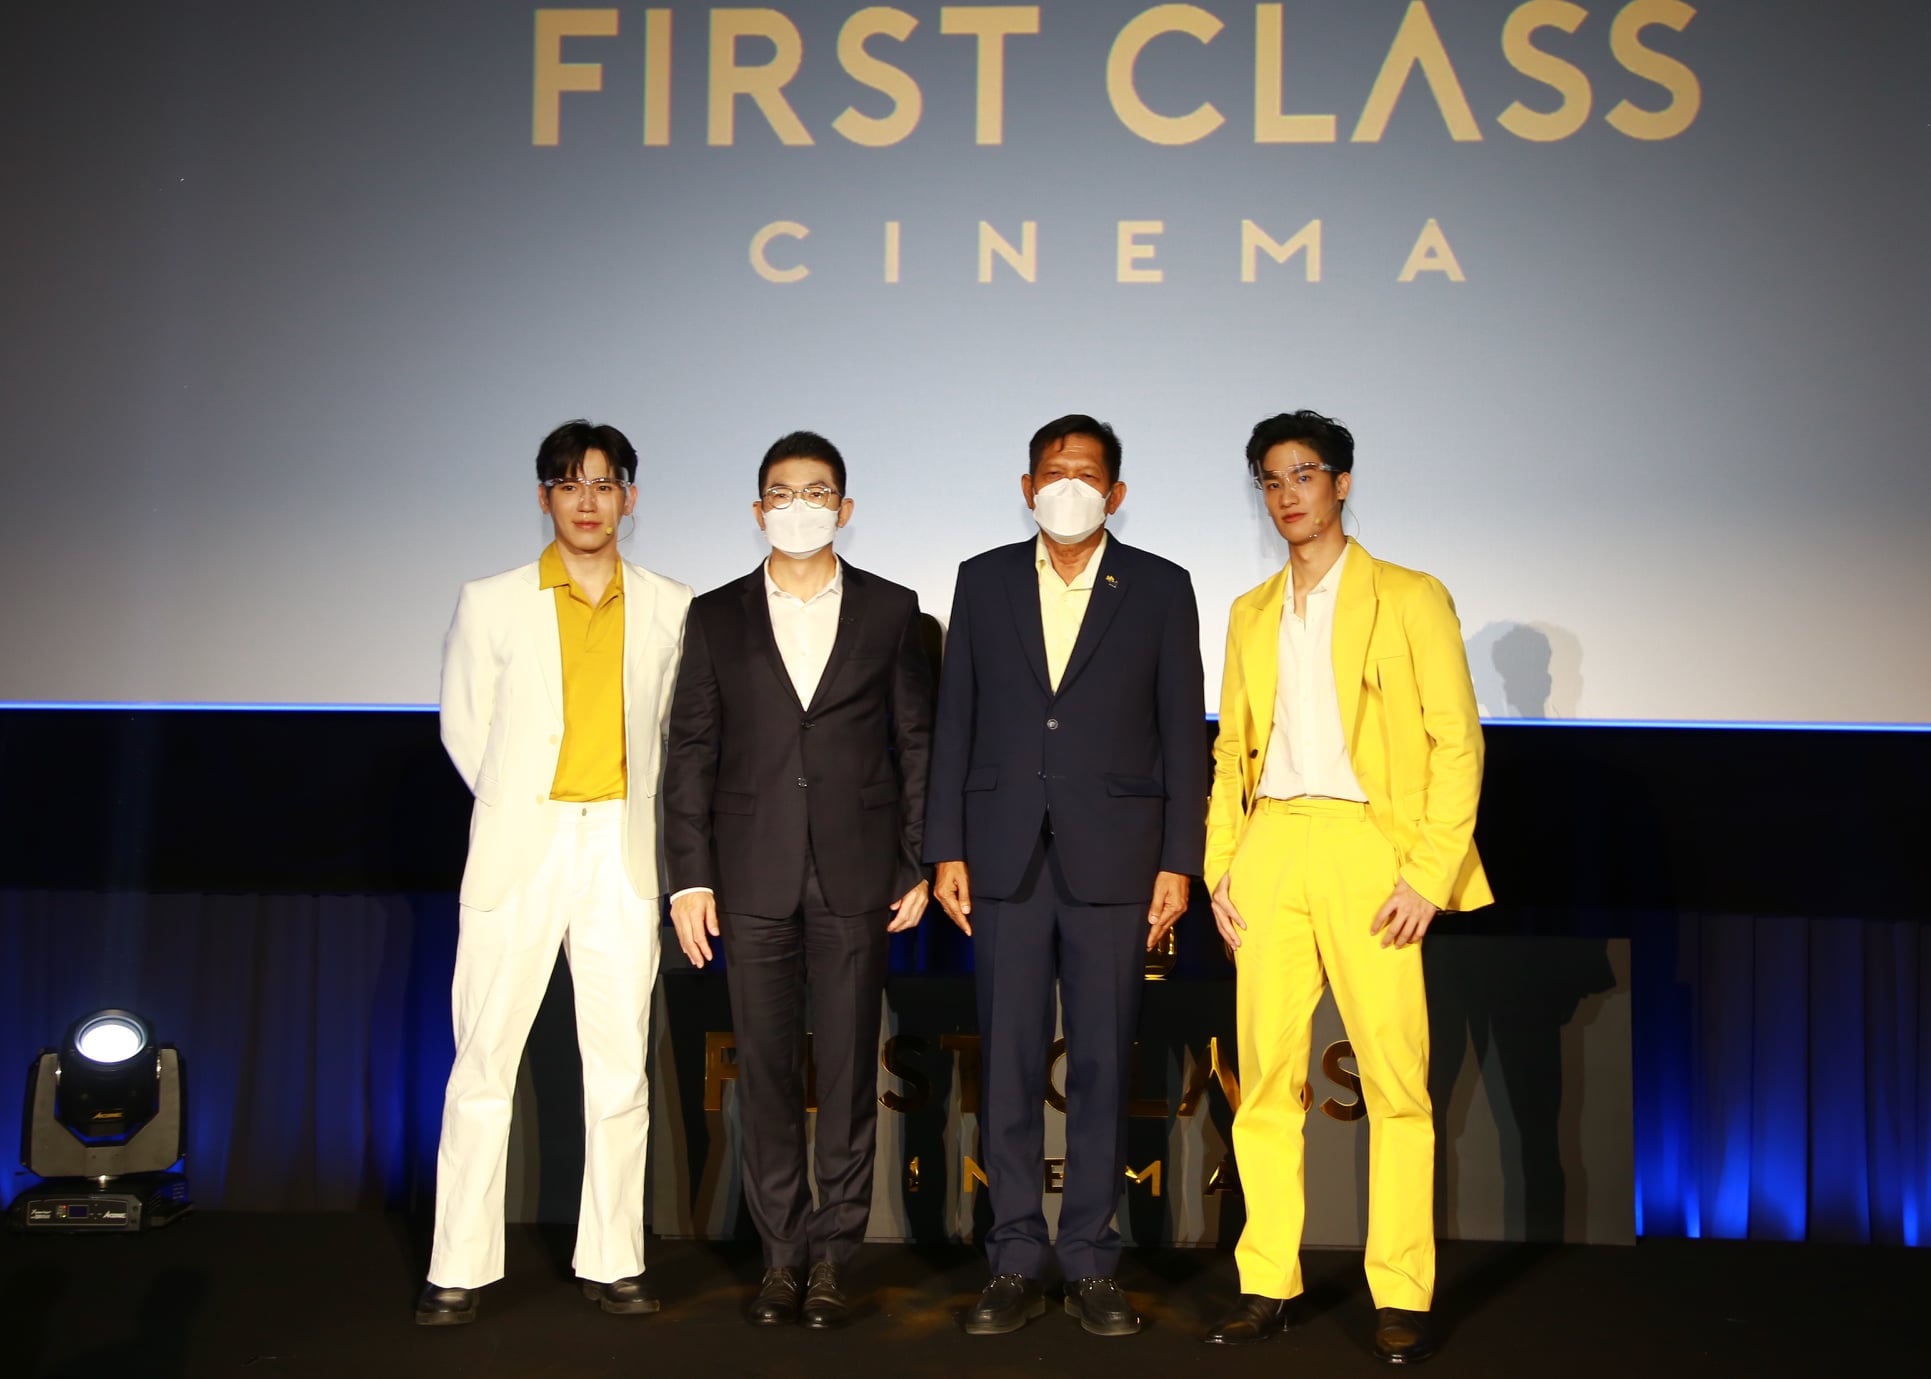 NT และ SF ชวนสัมผัสประสบการณ์ เฟิร์สคลาส พร้อมเปิดตัวแอปพลิเคชัน  เพื่อการดูหนังอีกระดับ ที่ “NT First Class Cinema”